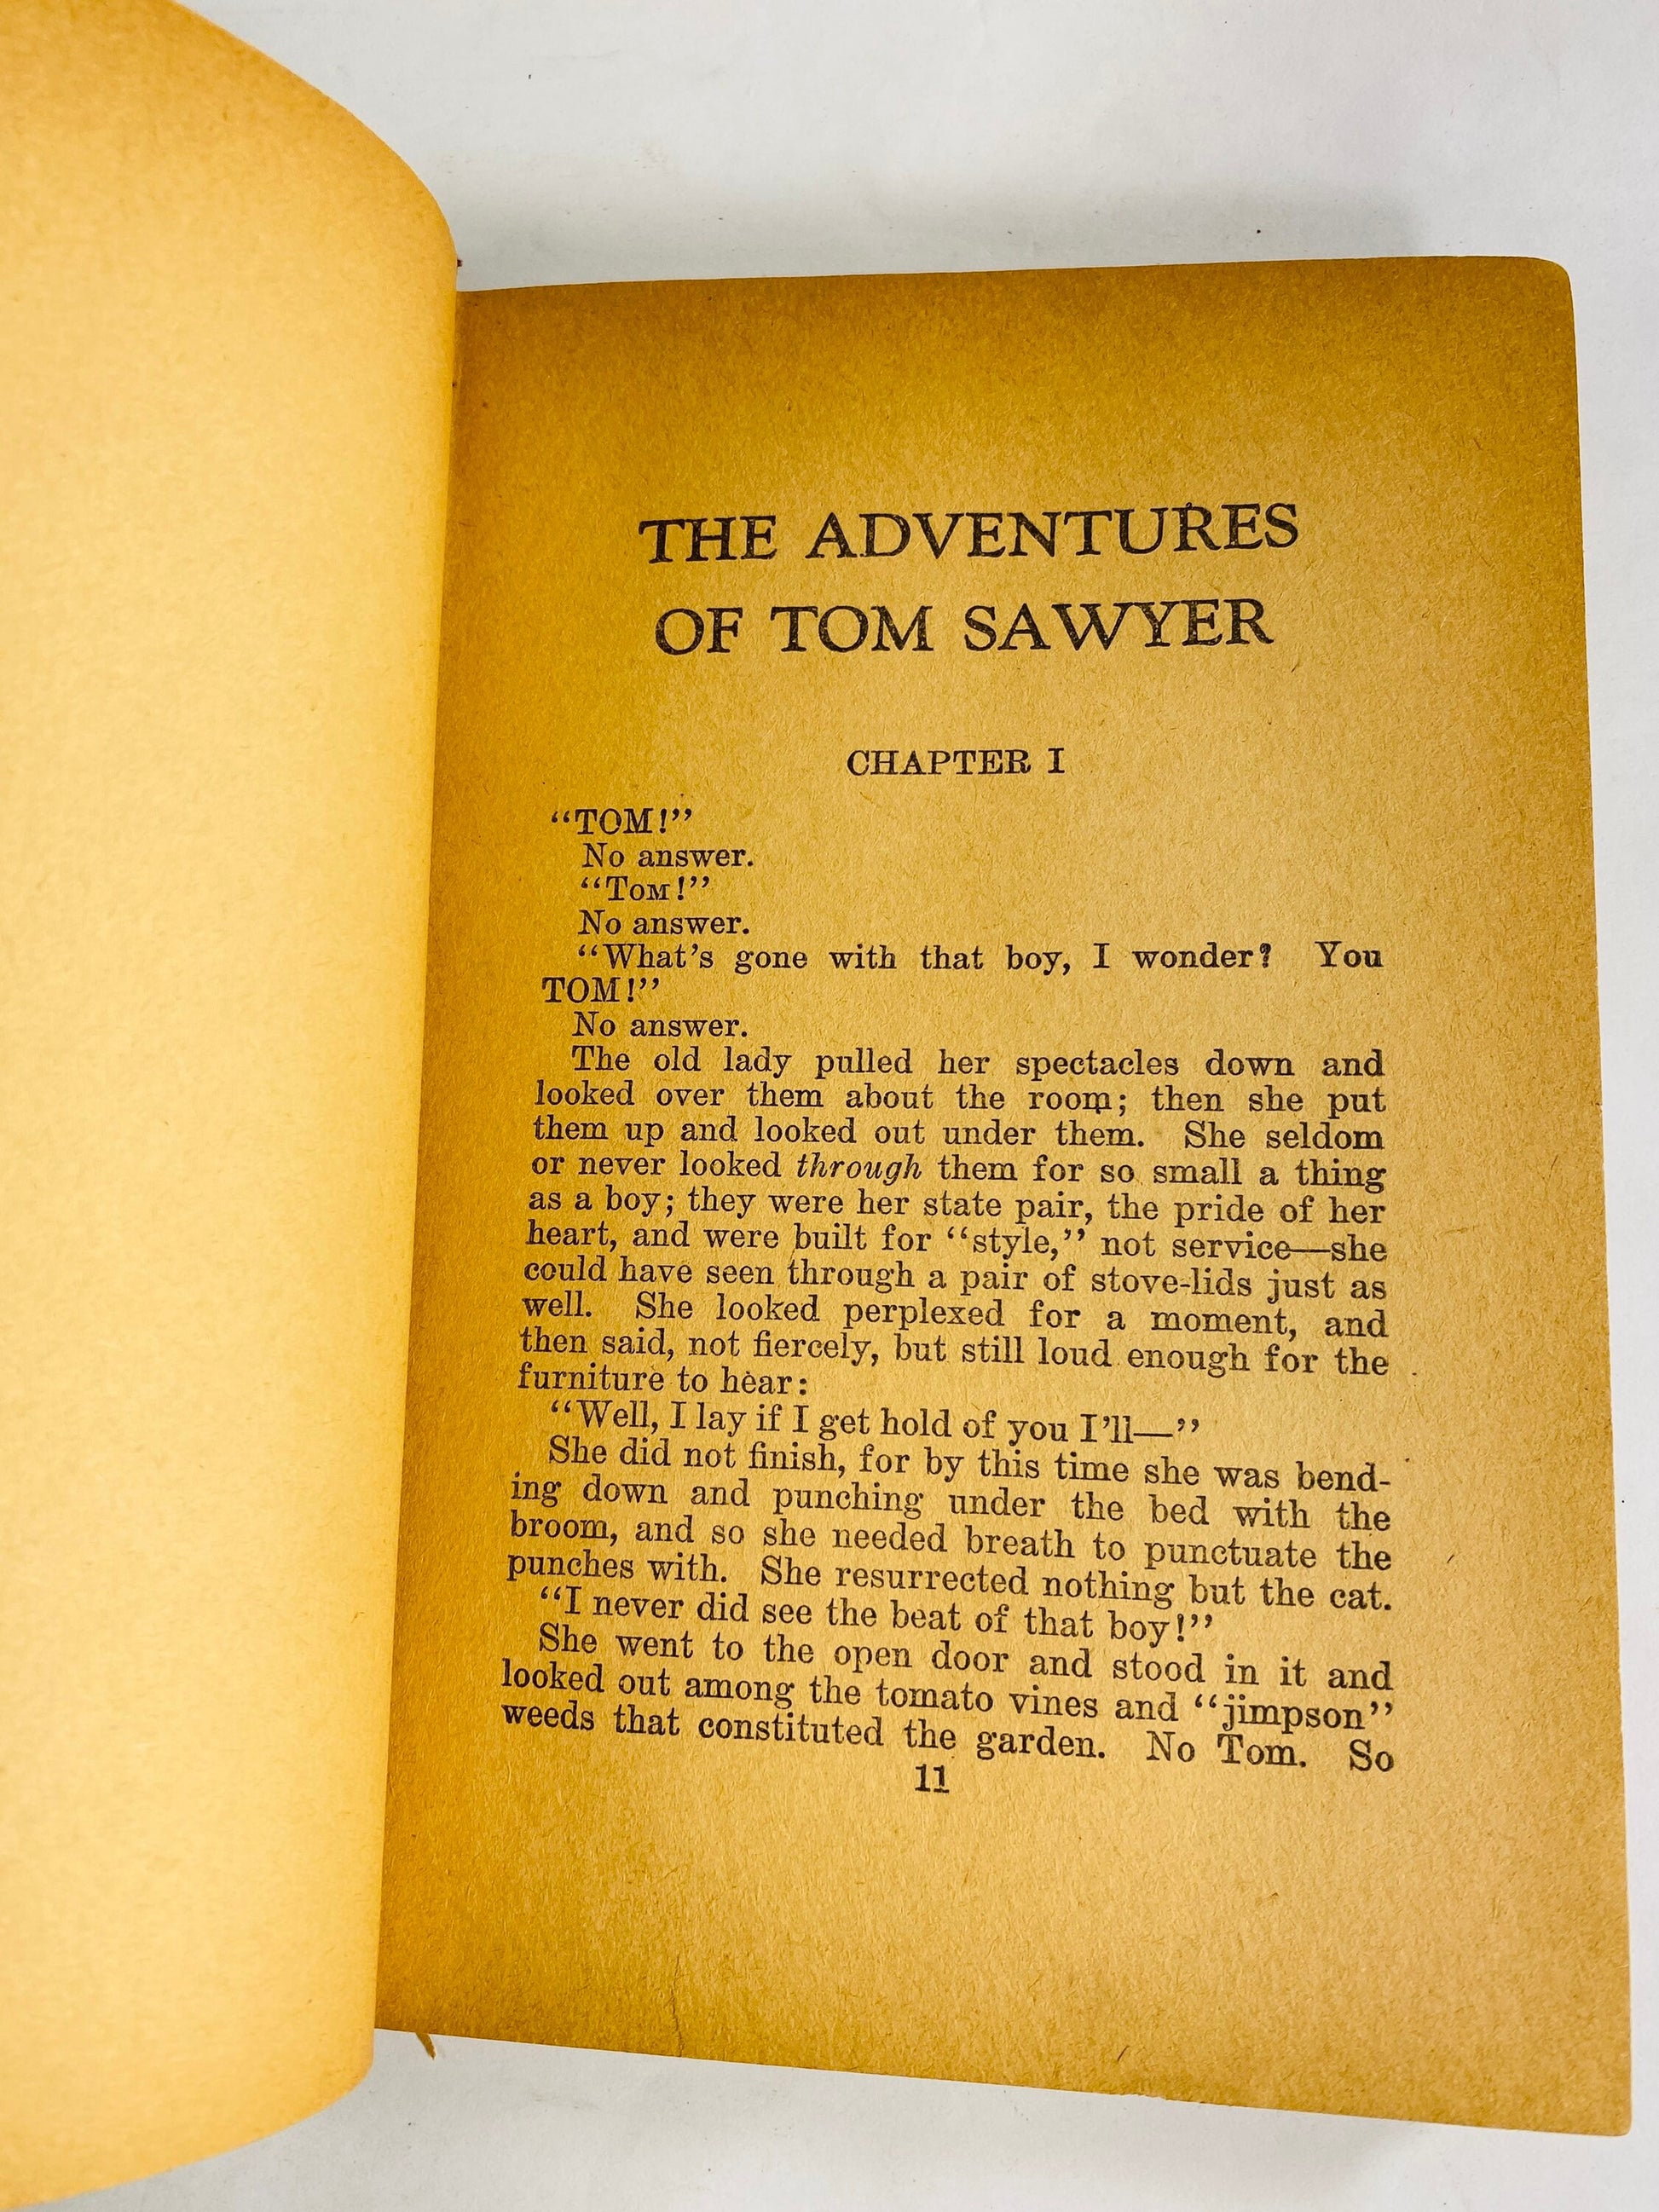 Adventures of Tom Sawyer by Samuel Clemens. Vintage red book circa 1931. Mark Twain small home bookshelf decor